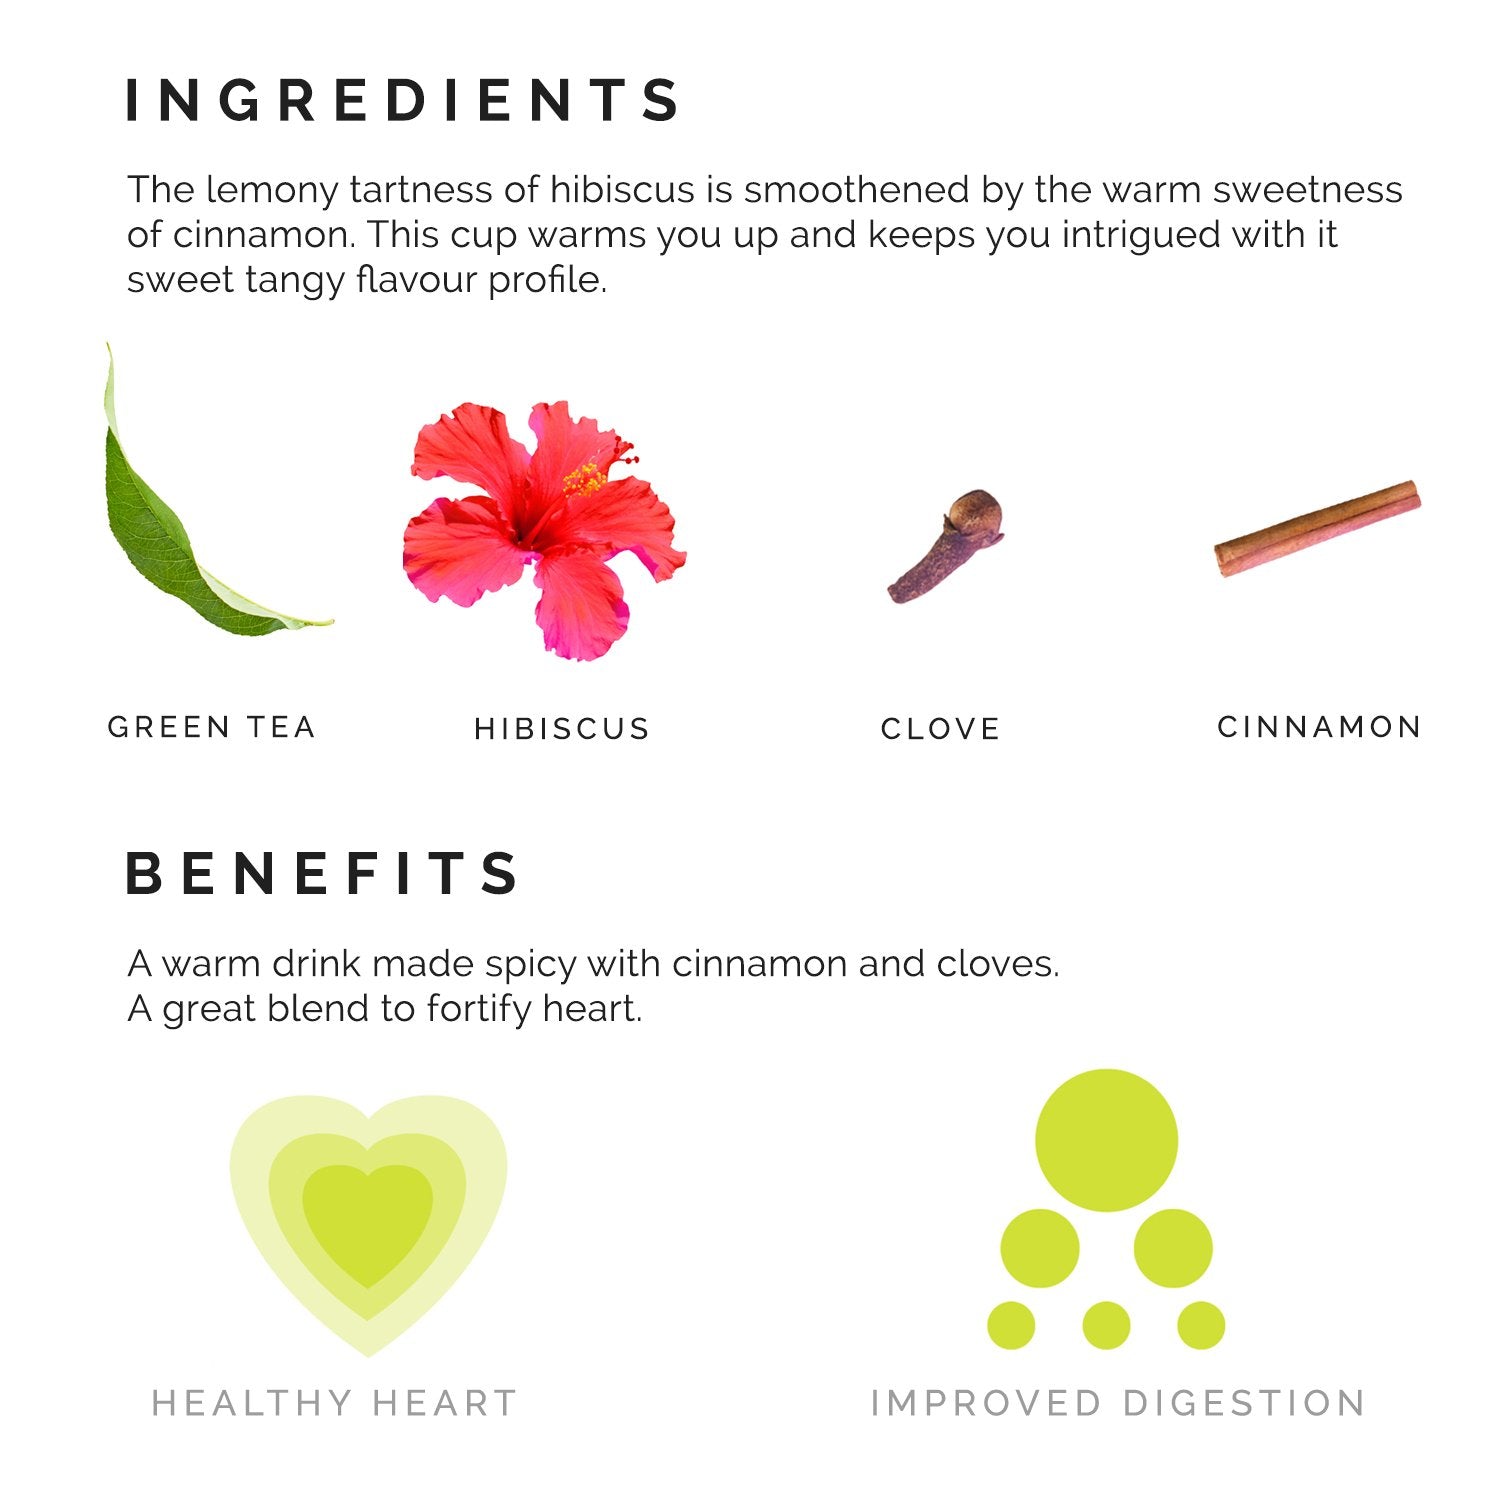 Teabox Organic Hibiscus Green Tea  (6 Units - 150 Teabags)